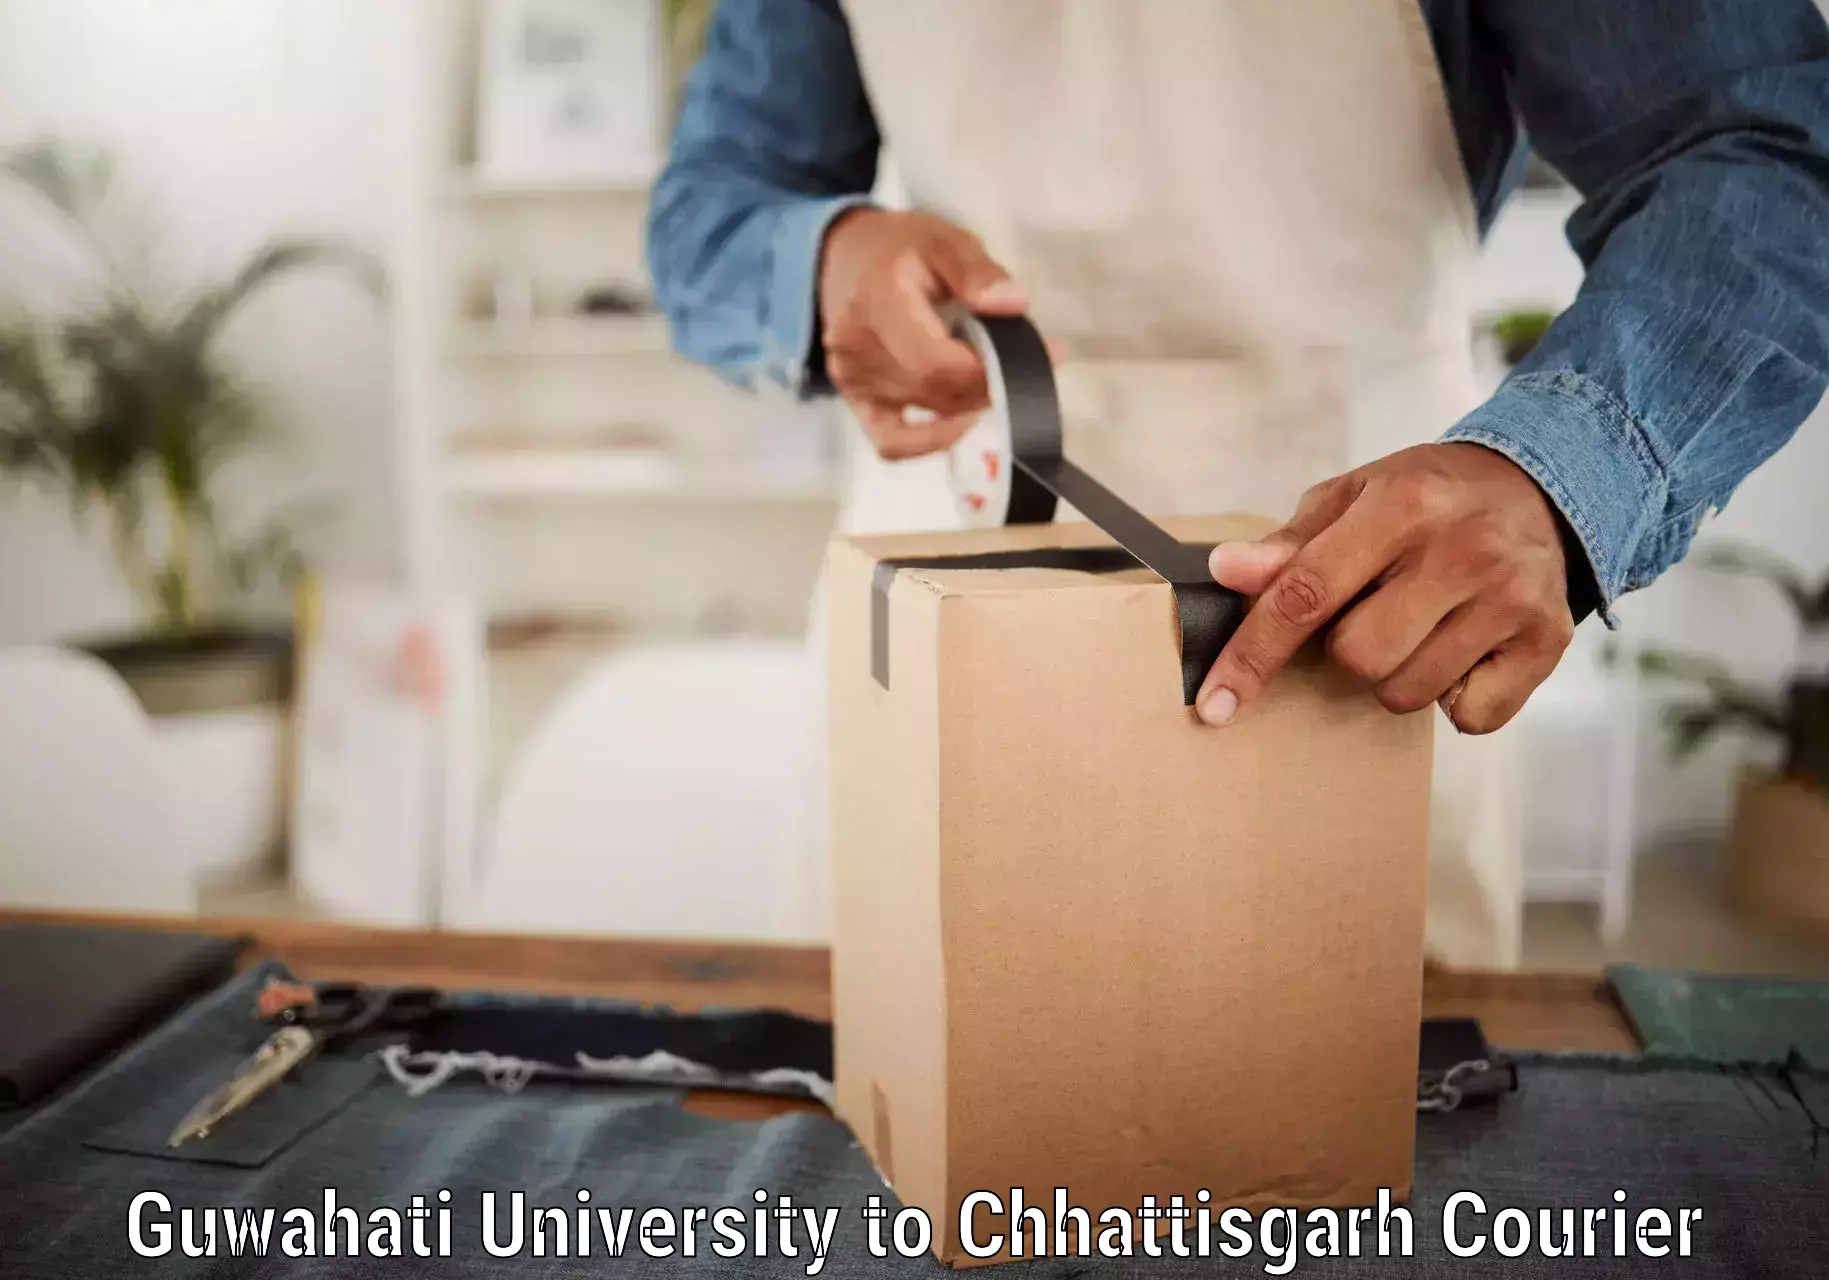 Affordable parcel service Guwahati University to Patna Chhattisgarh